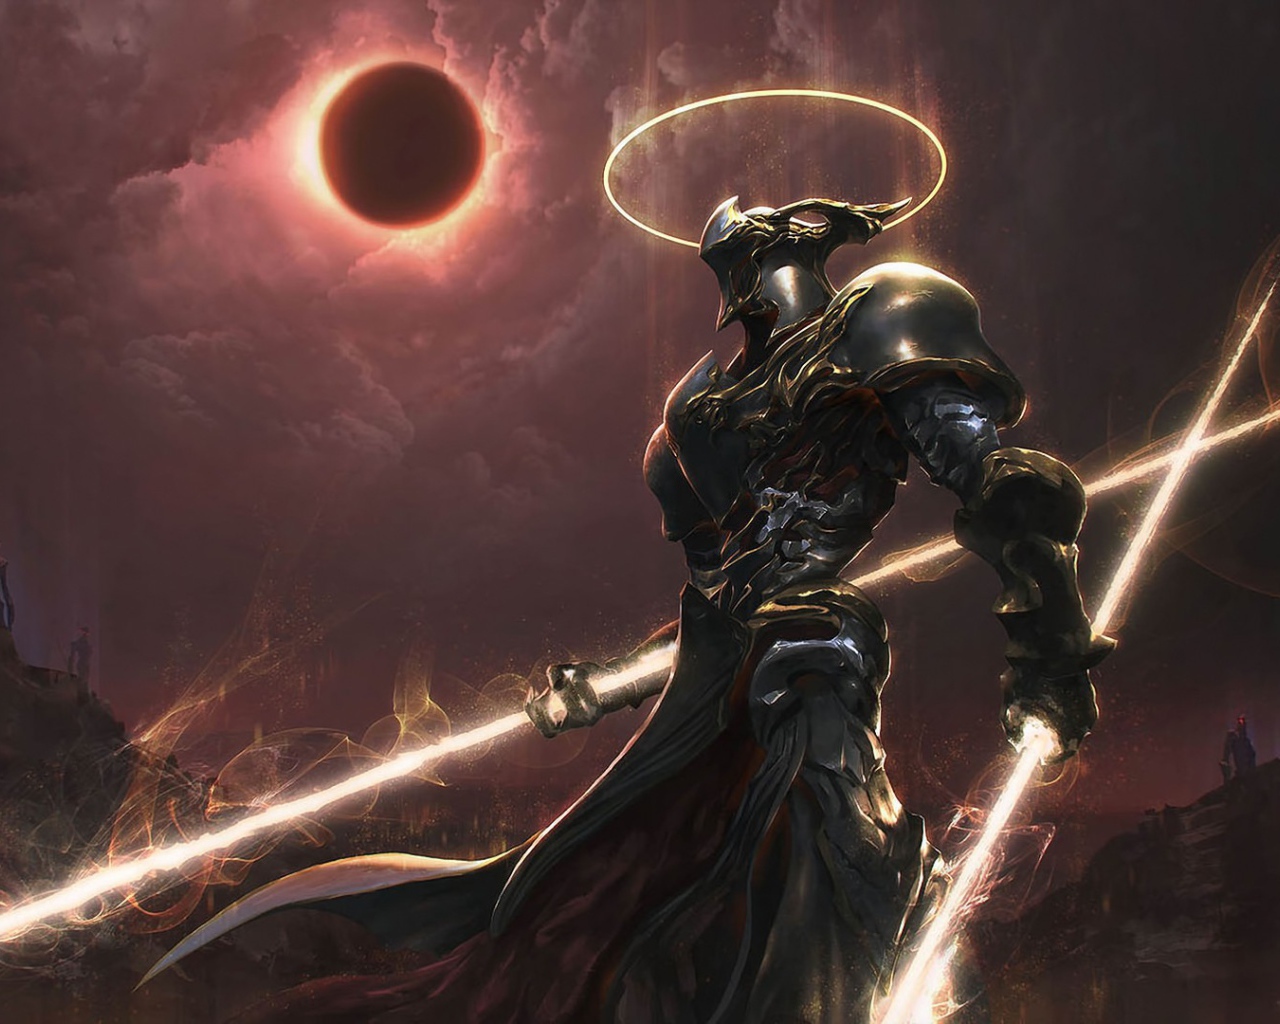 Knight underworld during the eclipse